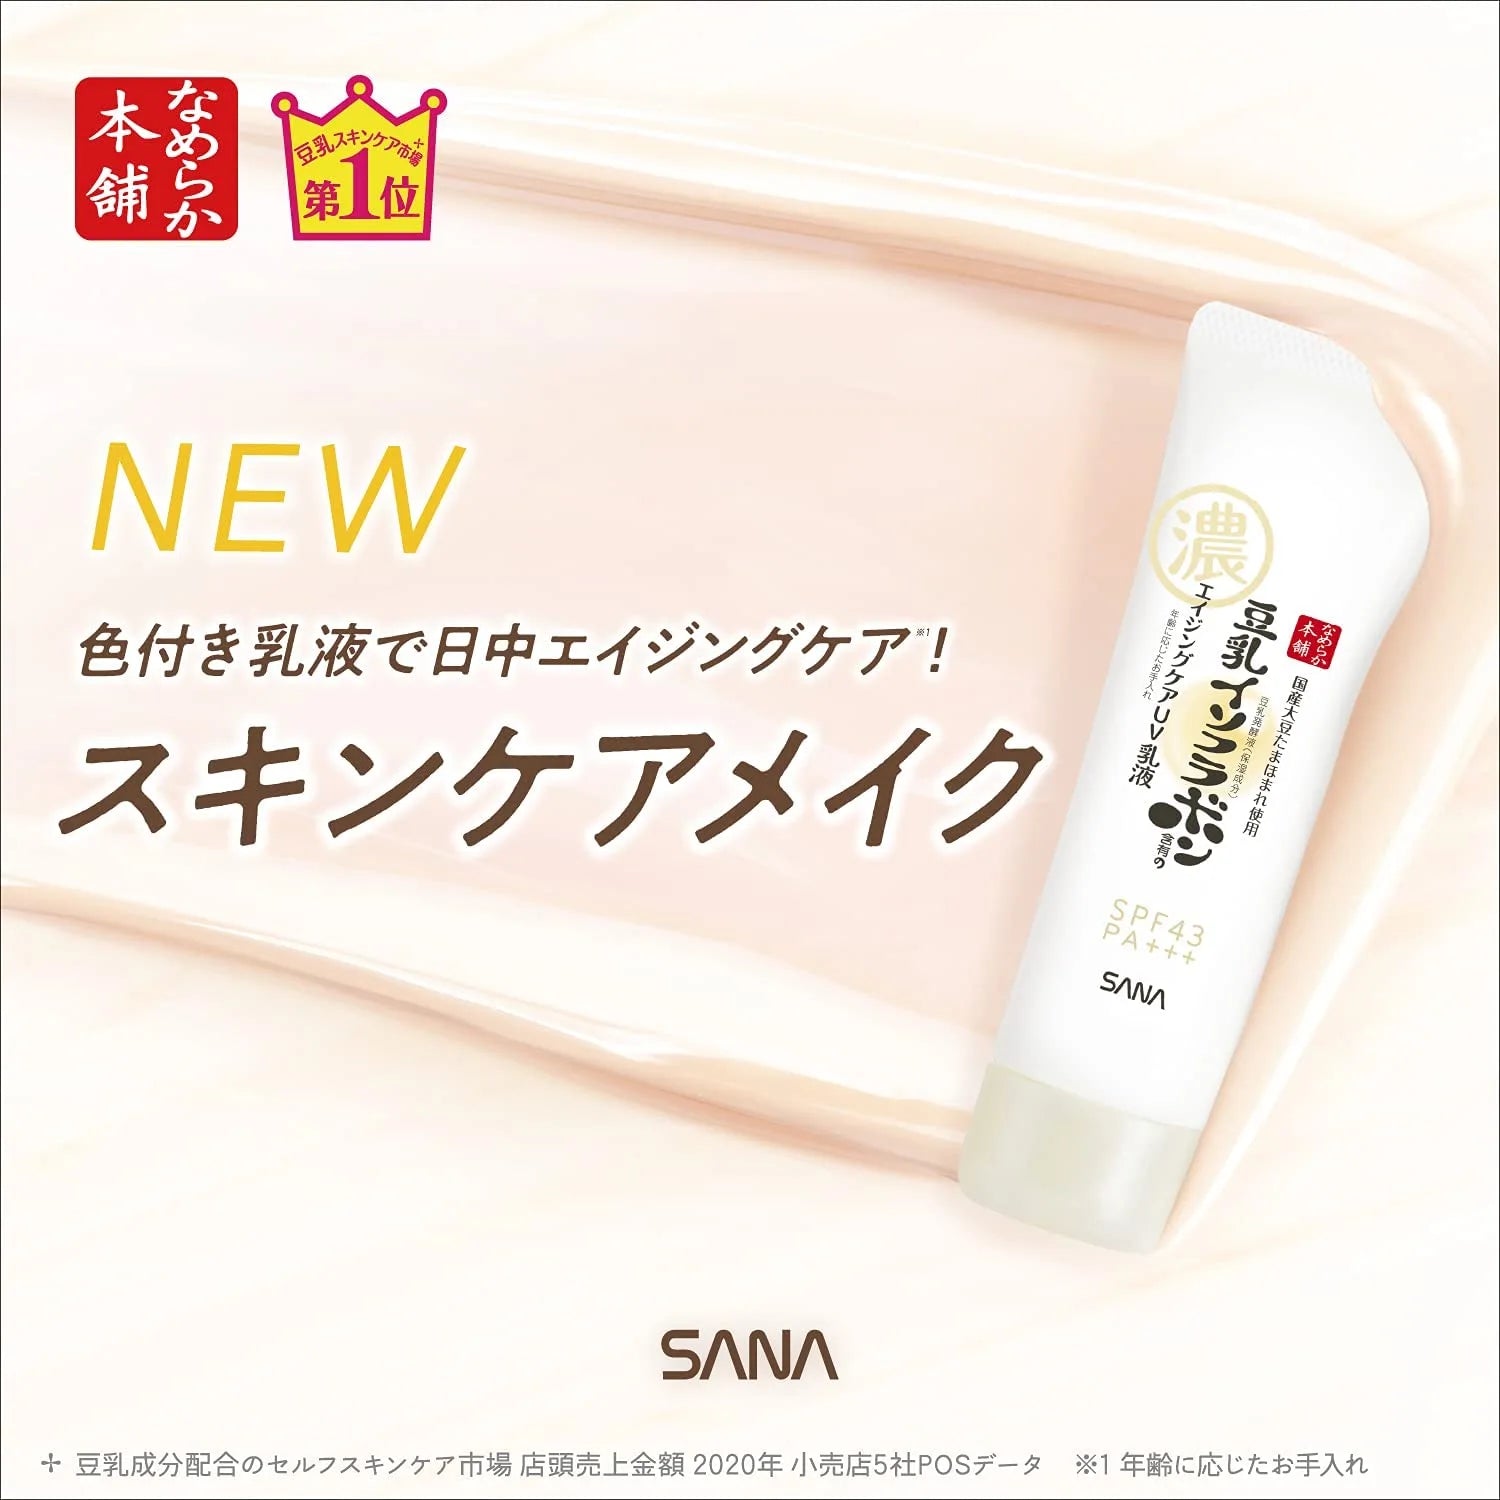 Sana Soy Isoflavones Retinol Cover UV SFP 43 PA+++ 60g - Buy Me Japan